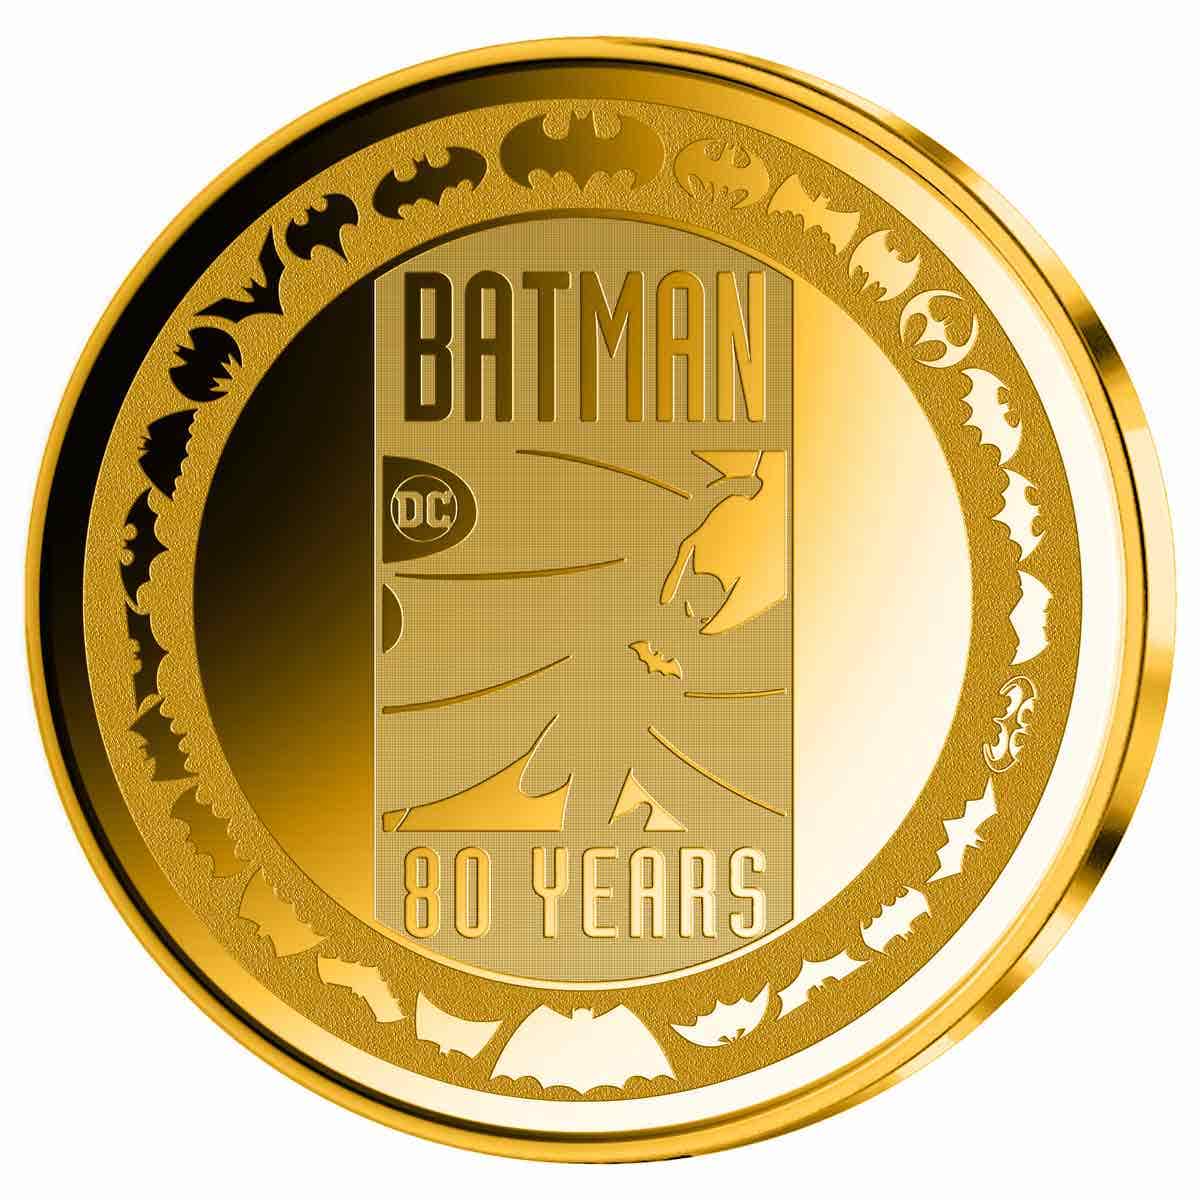 Calling Batman Gold Medallion